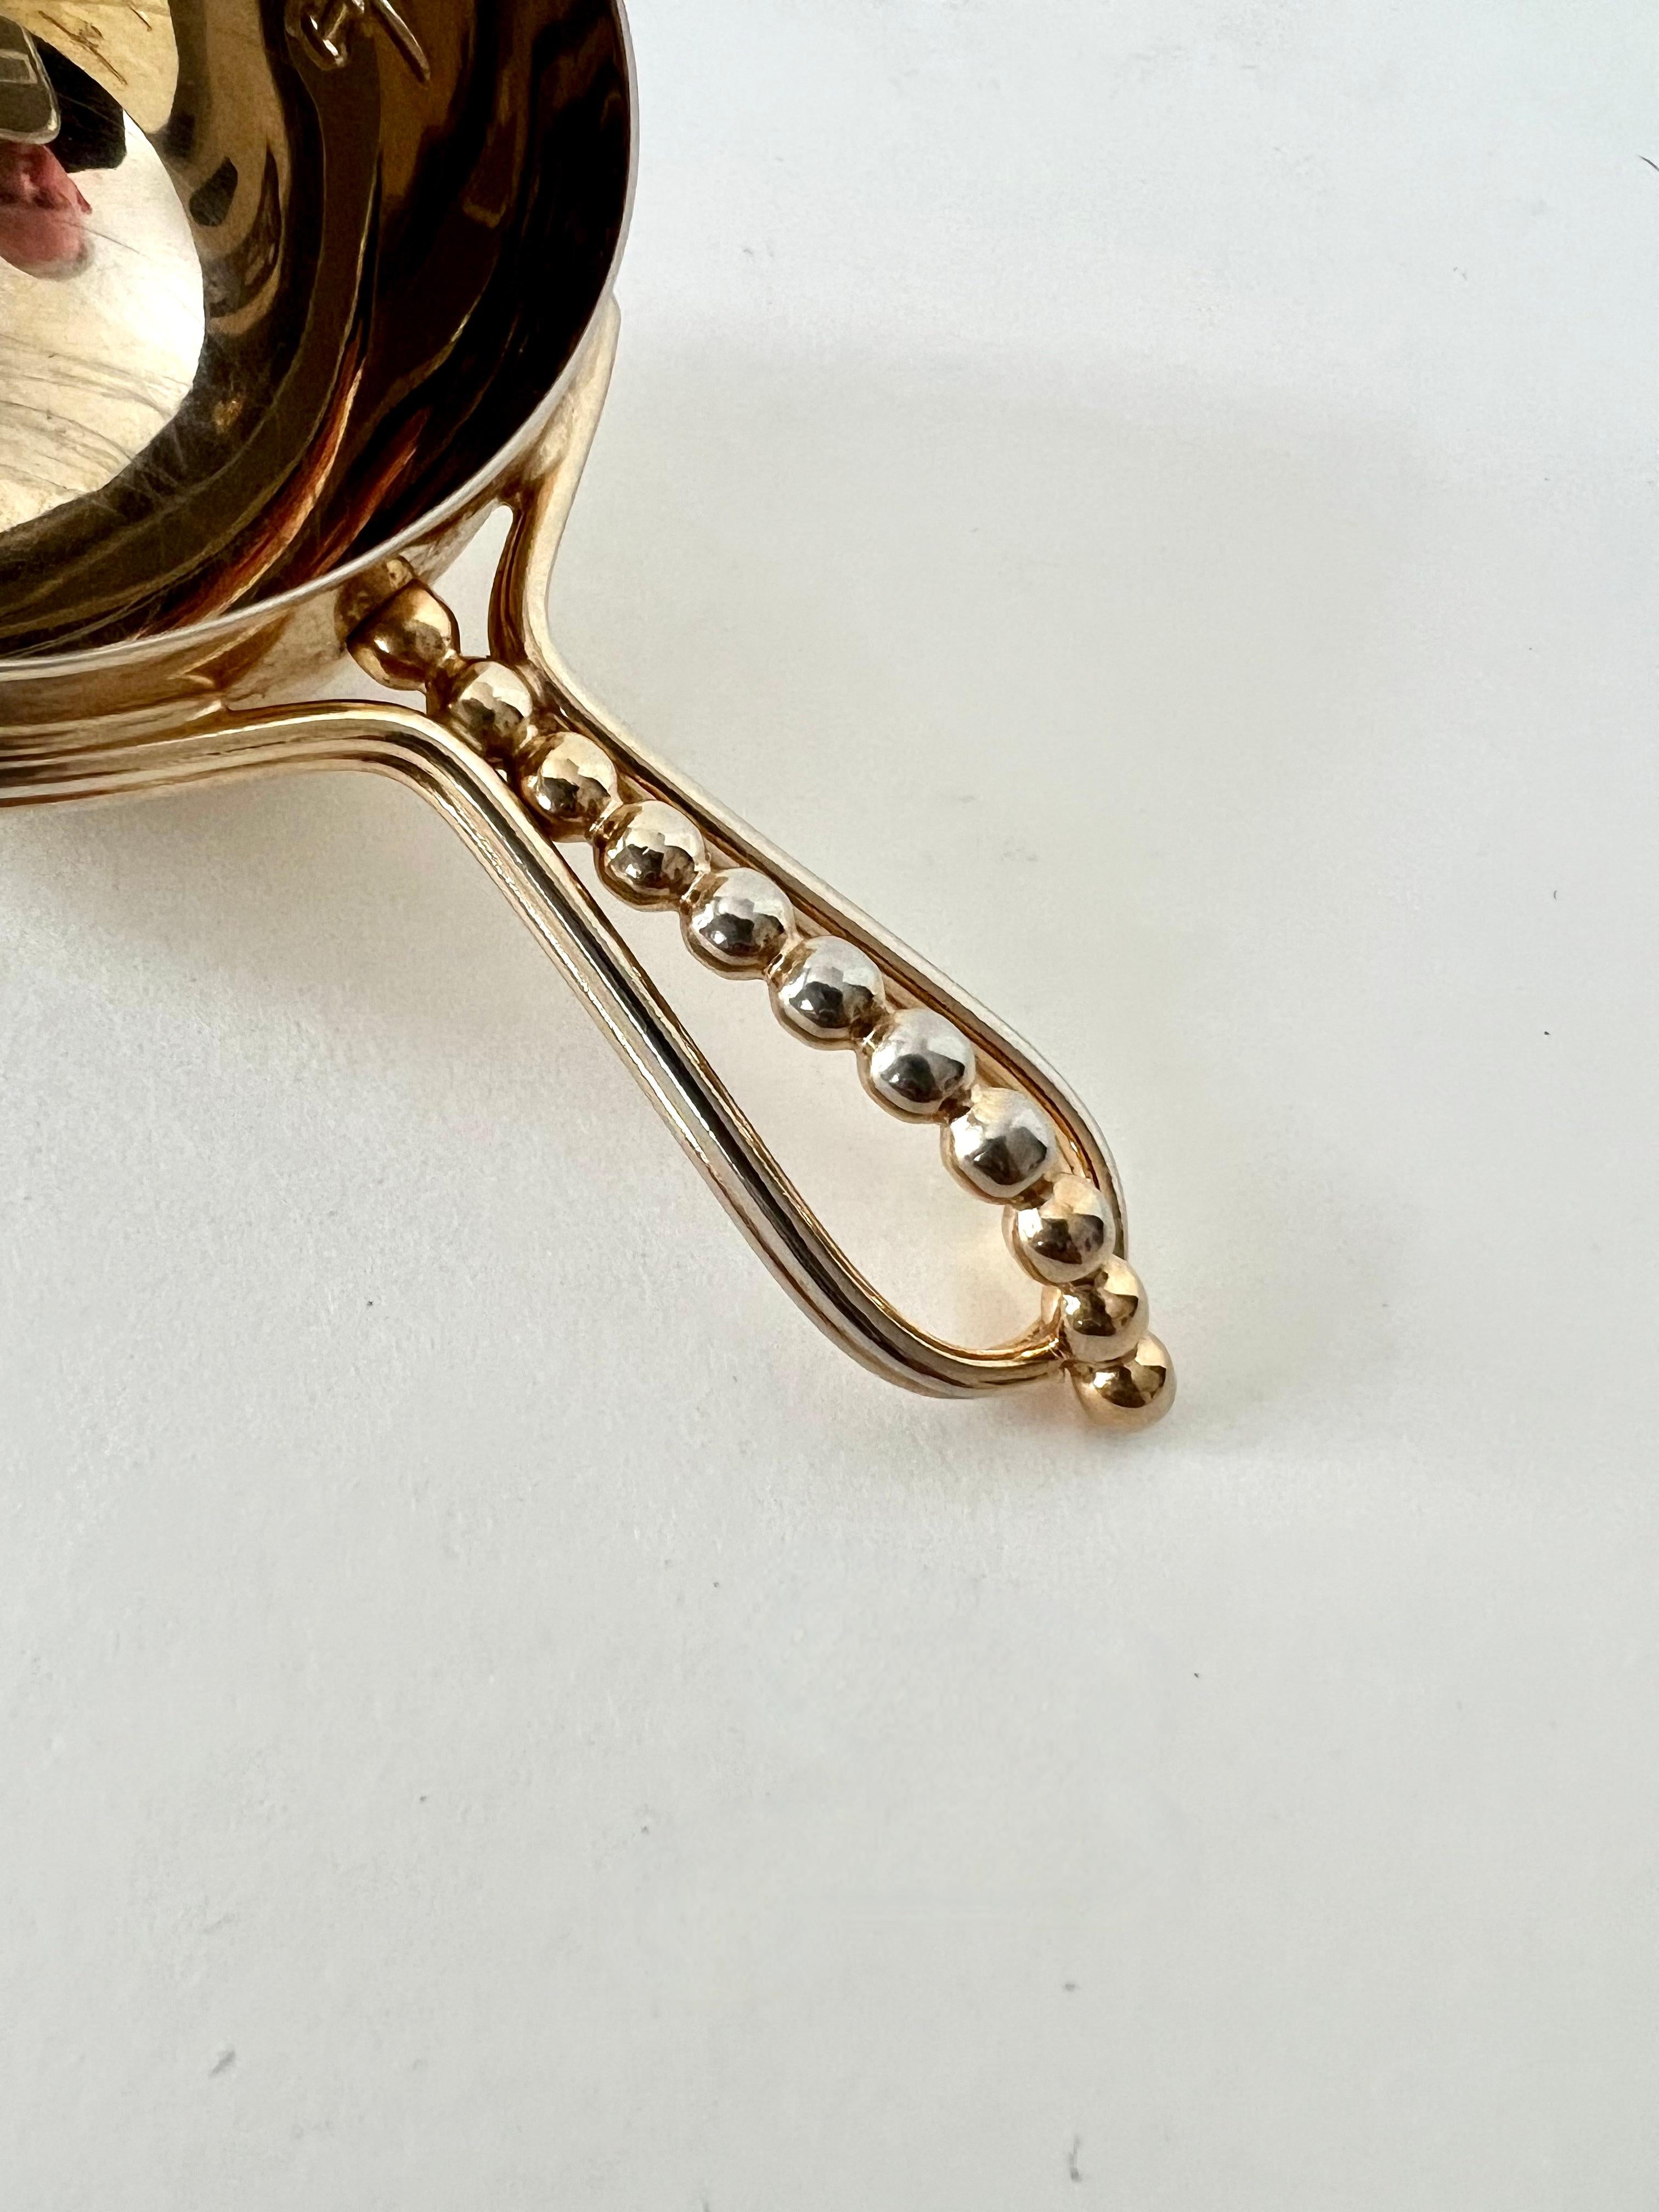 Brass Modern Nickel Jigger in the Style of Napier or Georg Jensen For Sale